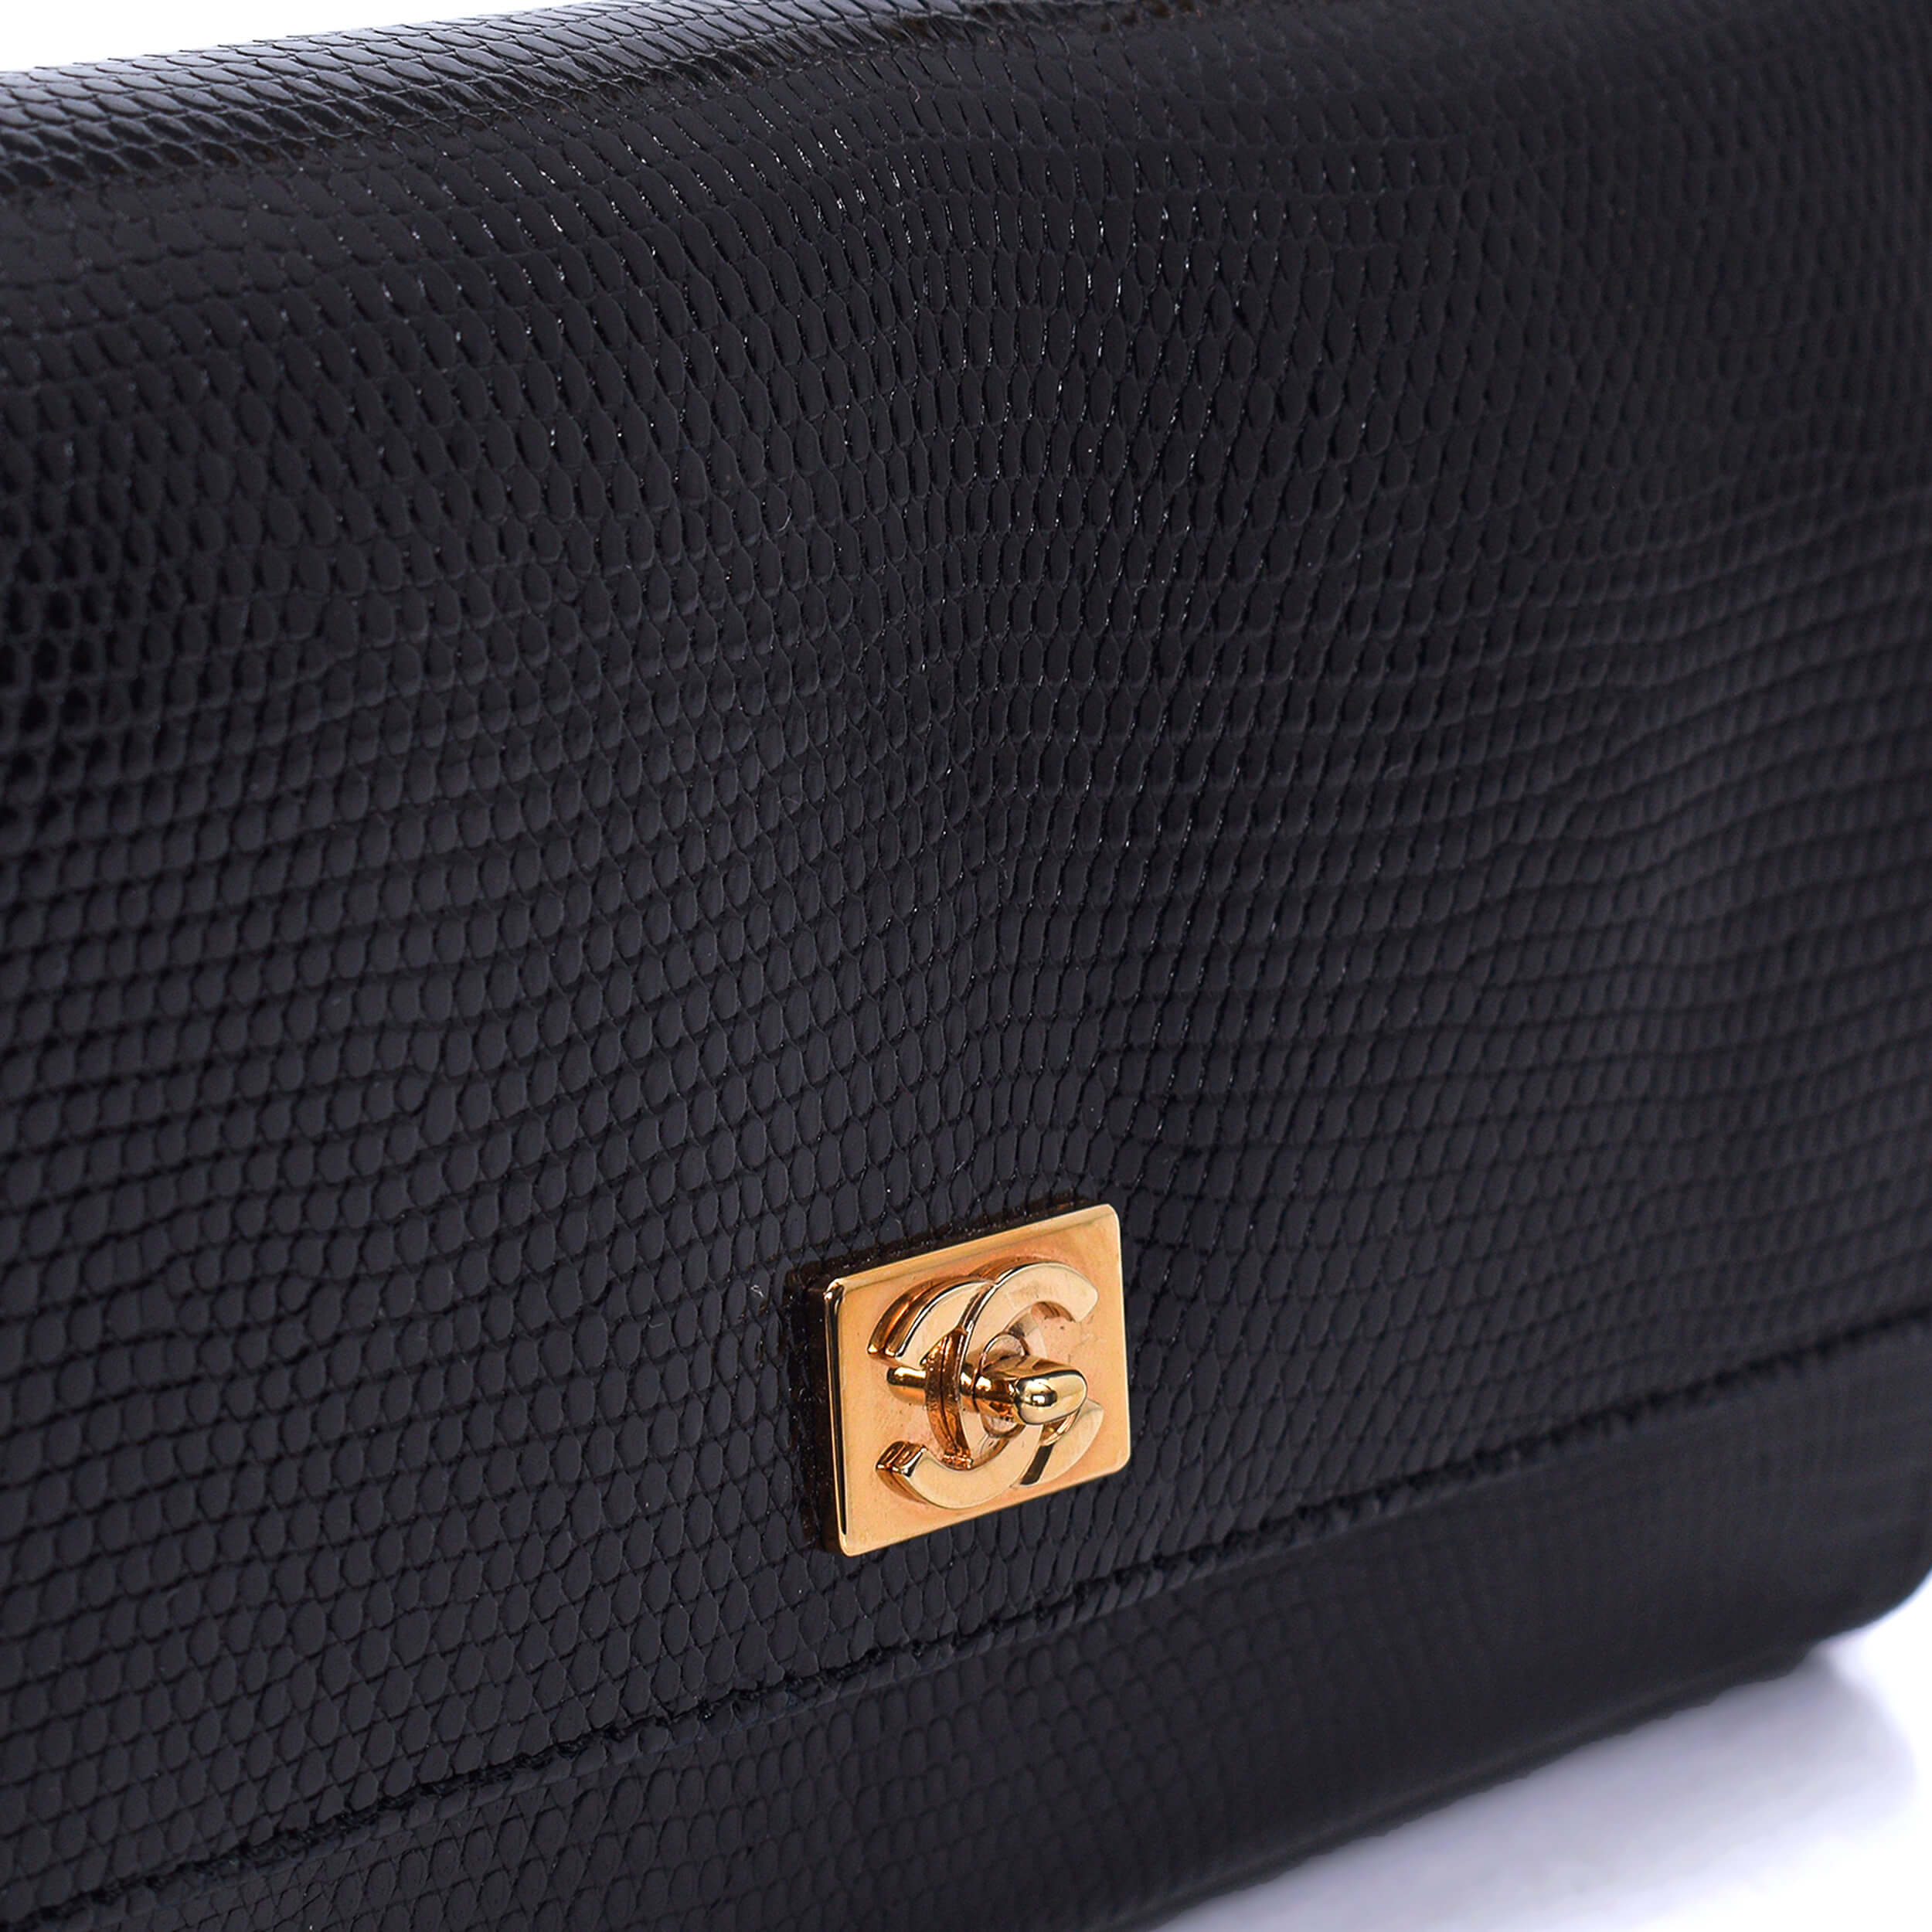 Chanel - Black Exotic Gold Chain Baguette Bag